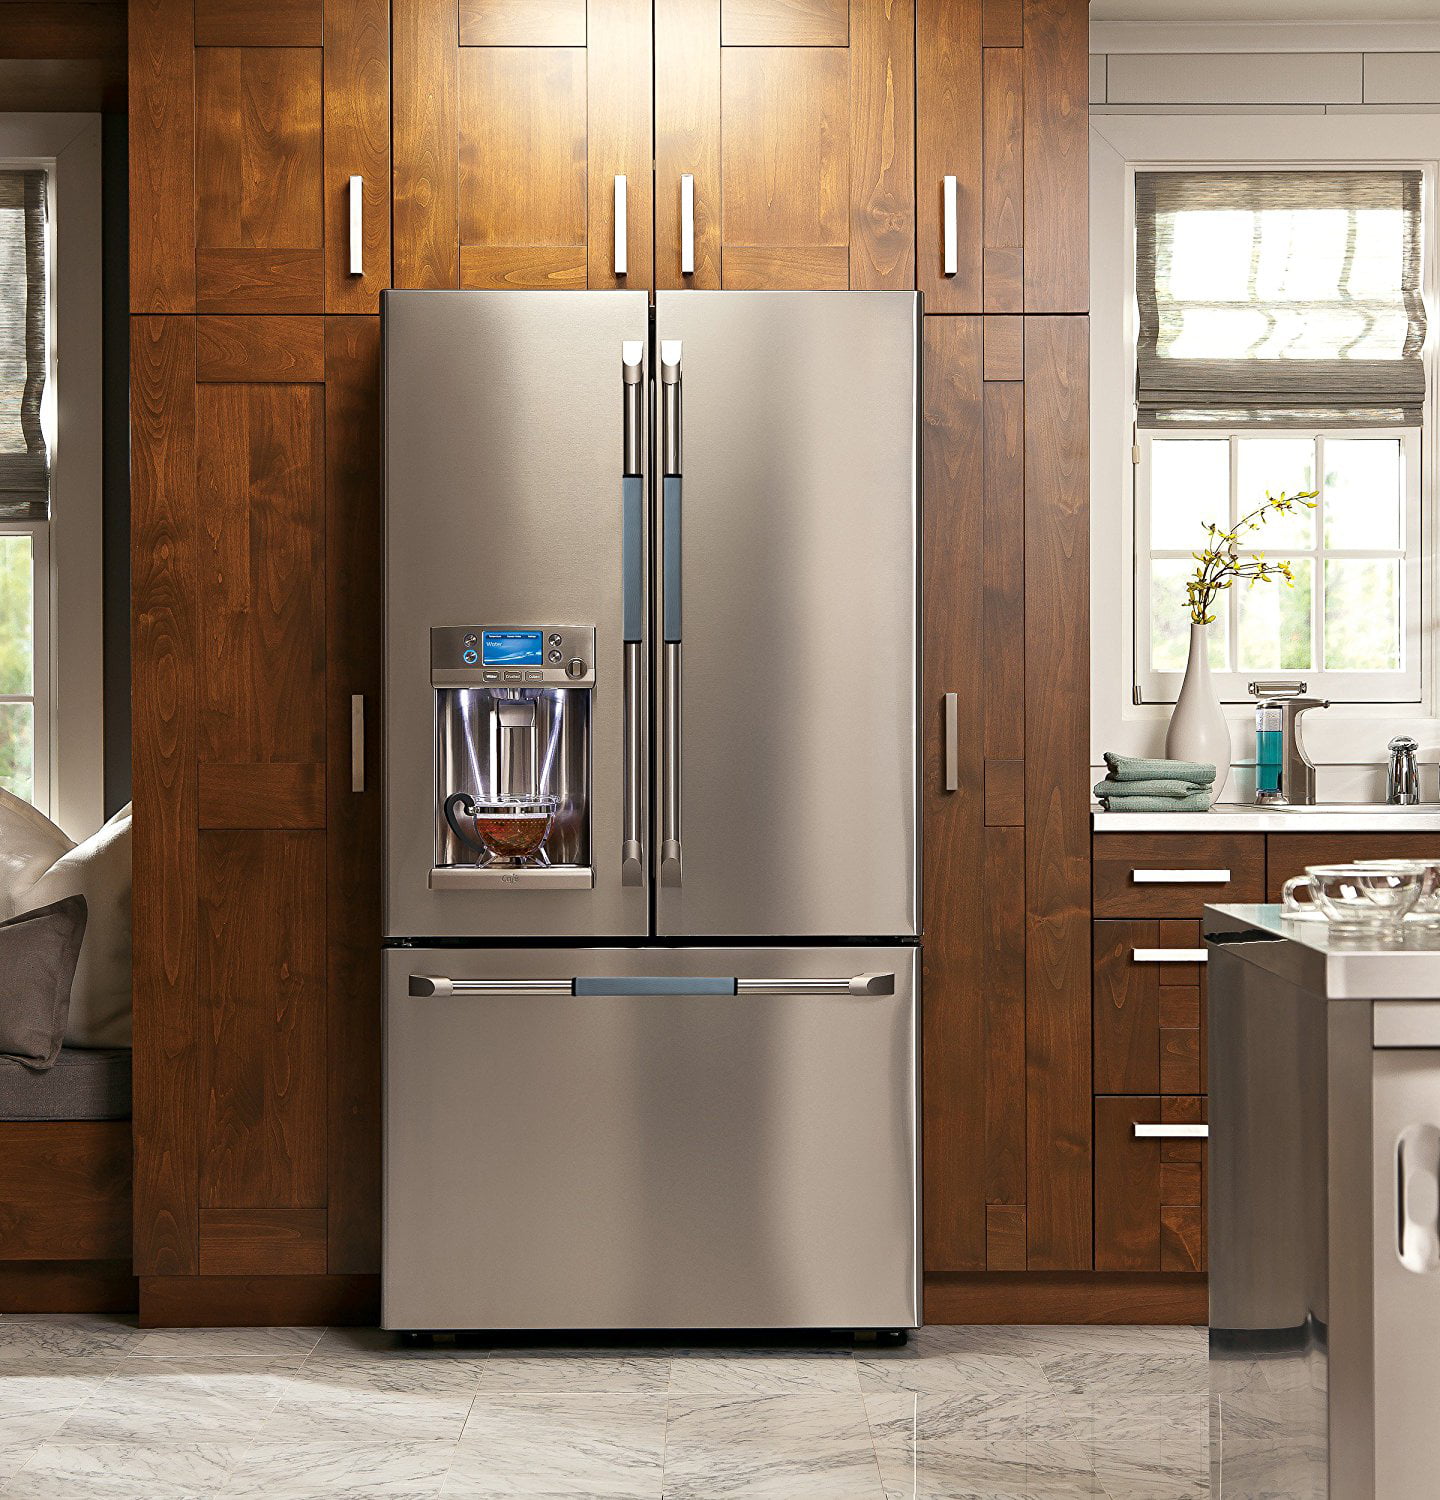 Details about   AG_ FT 2pcs Kitchen Appliance Handle Cover Decor Door Refrigerator Fridge Oven 